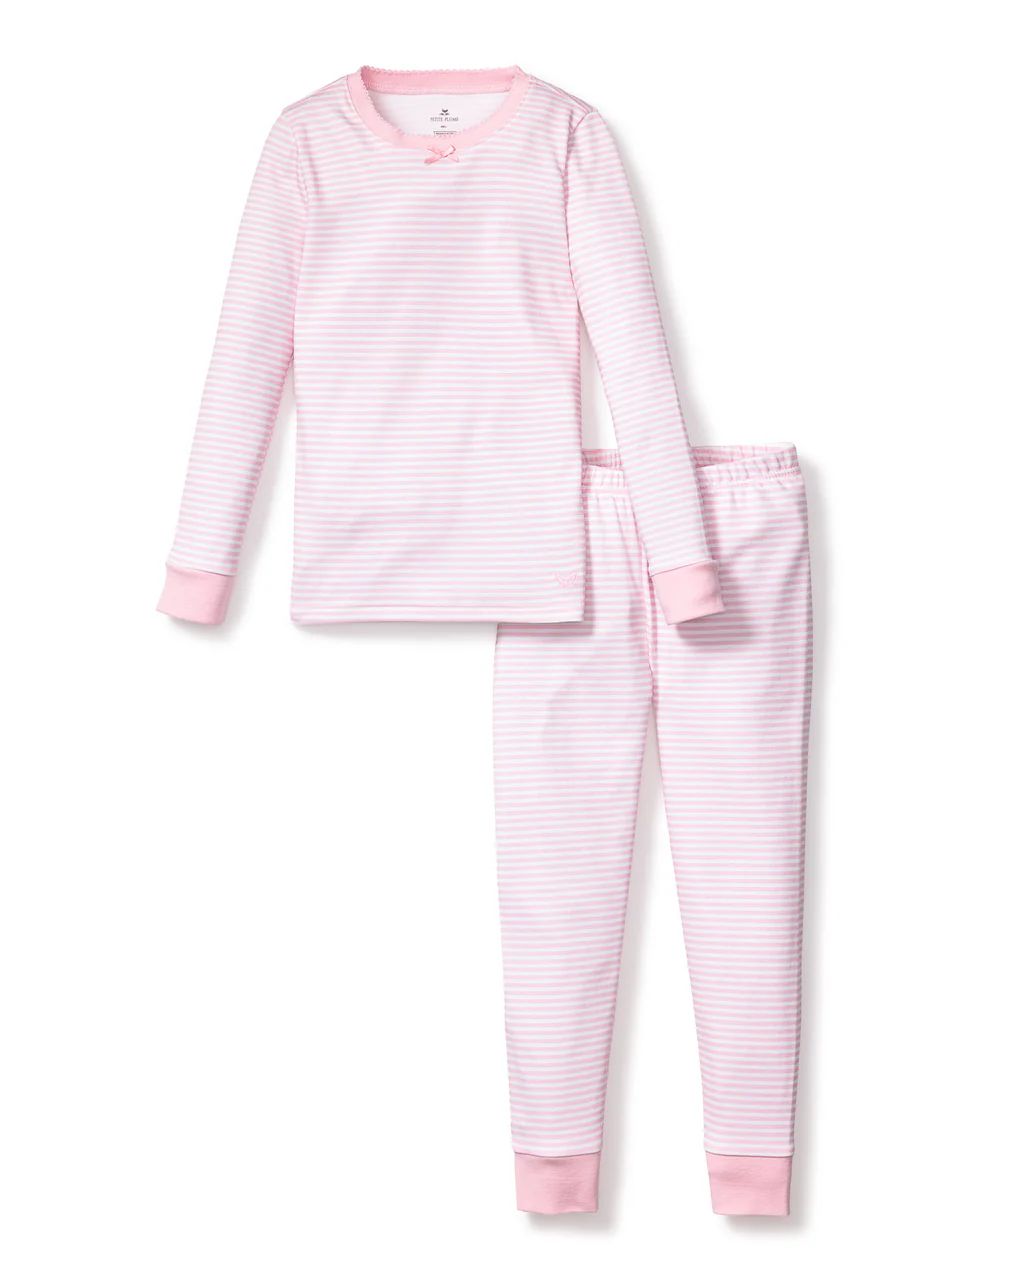 Kid's Pima Snug Fit Pajama Set in Pink Stripes | Petite Plume